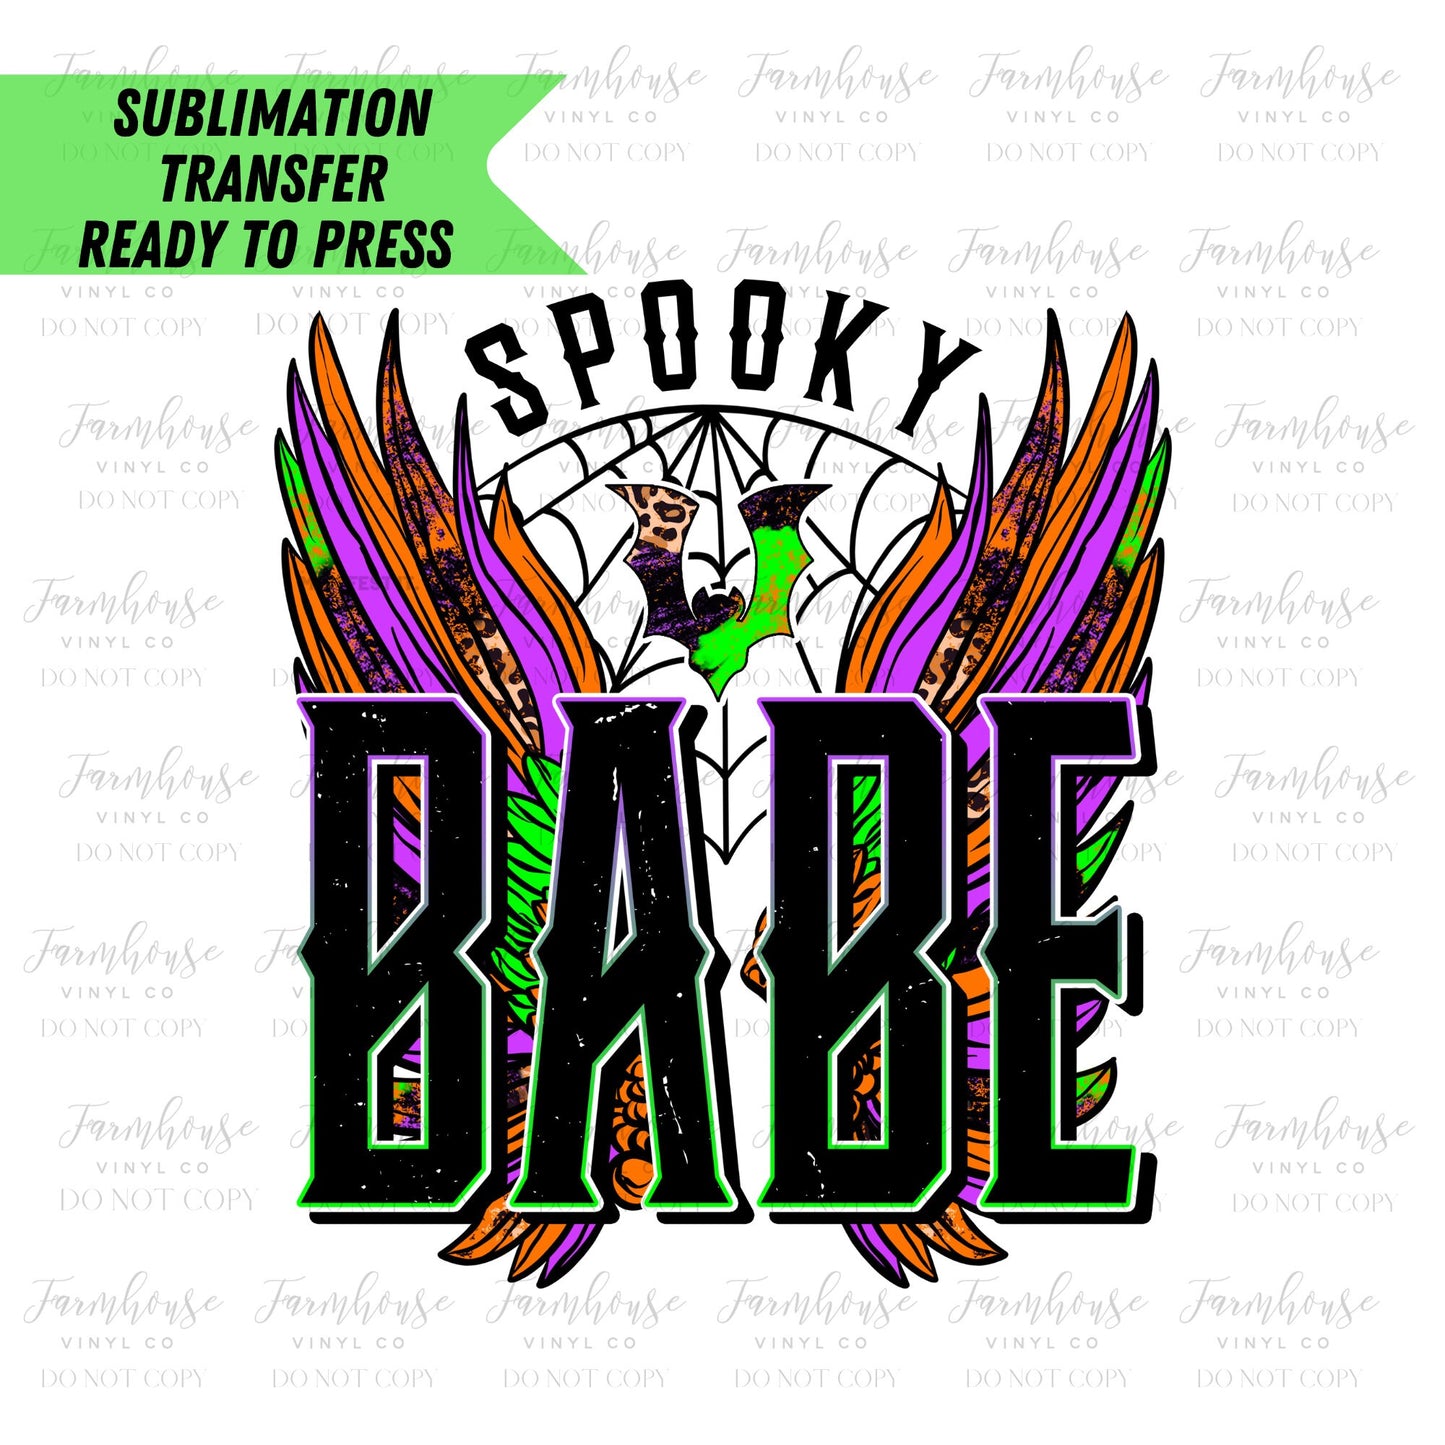 Spooky Babe Halloween, Halloween Sublimation Transfer, Trick or Treat Design, Sublimation Transfer Ready Press, Halloween Babe Design